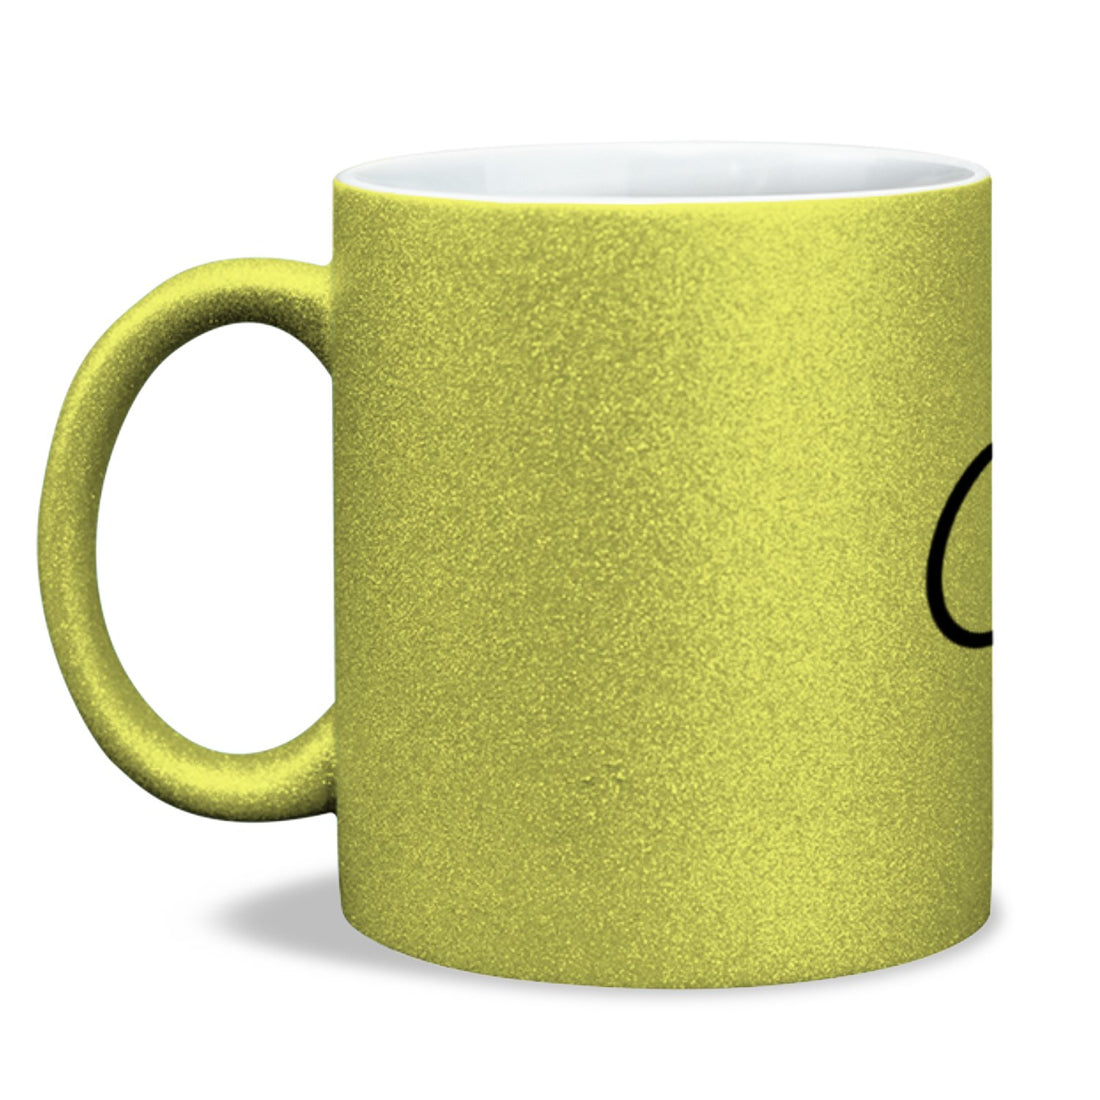 My Coffee Mug - Positively Sassy - My Coffee Mug